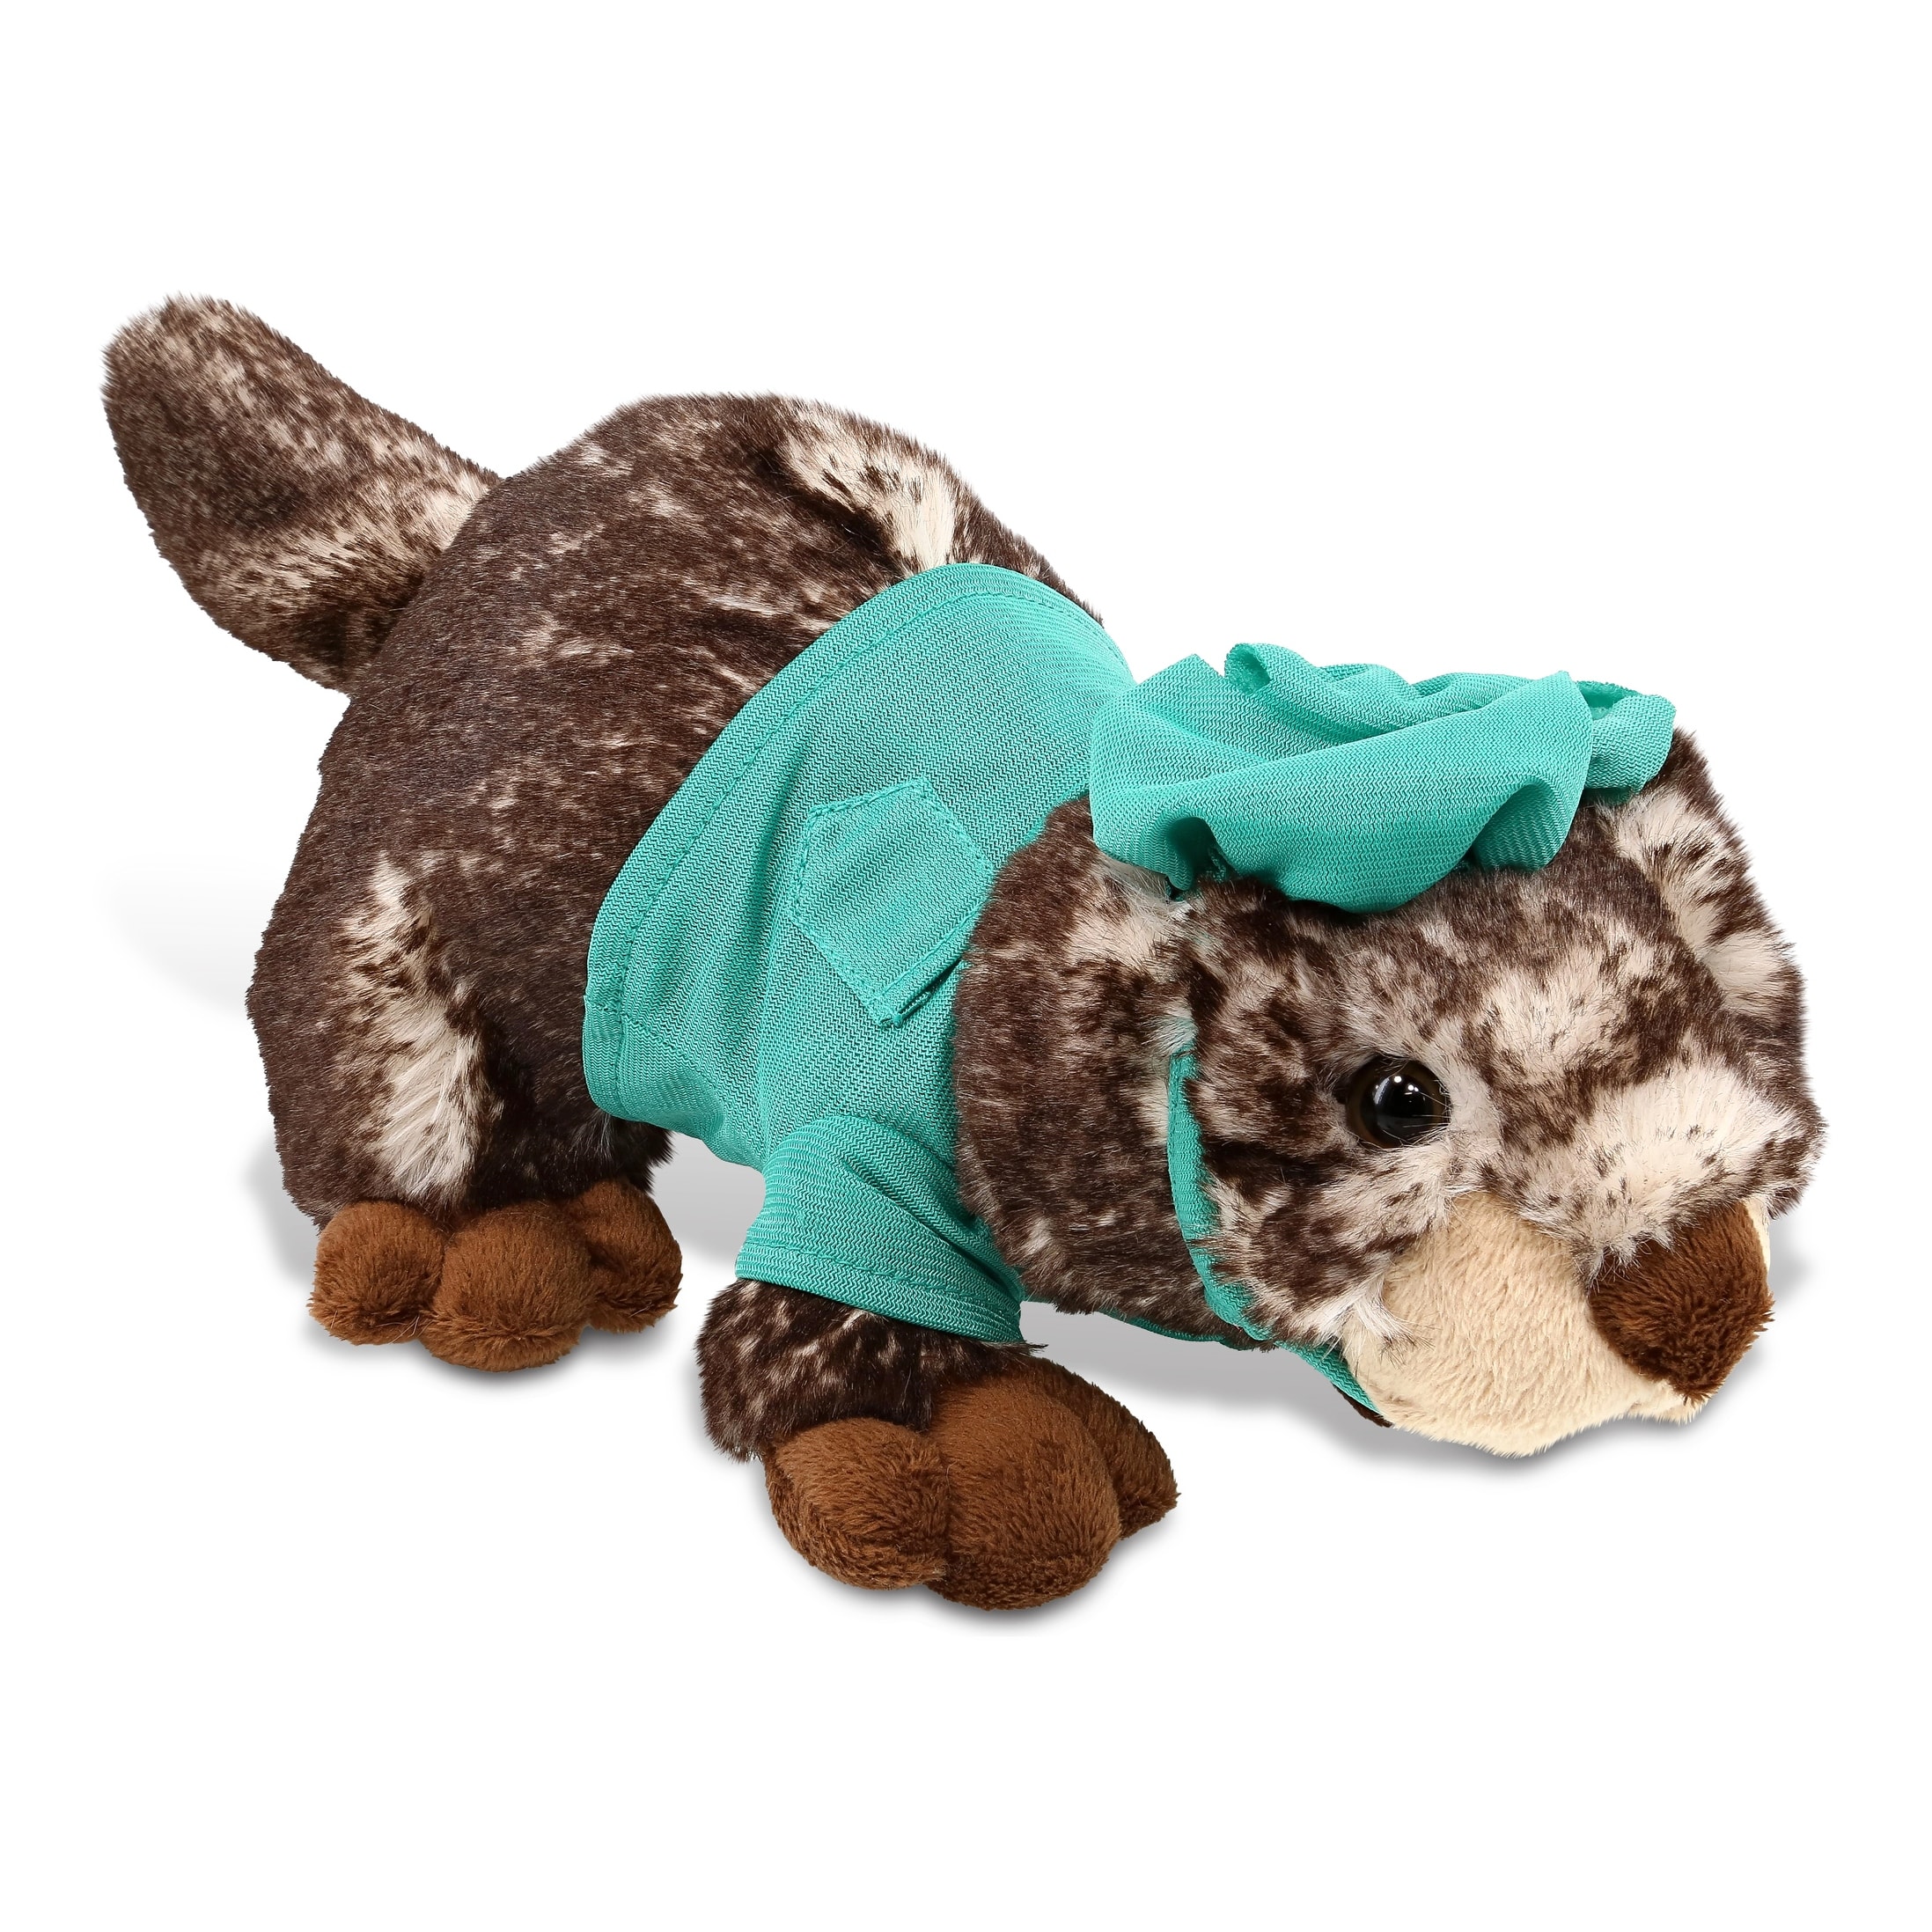 DolliBu Lying Marmot Doctor Plush Toy with Cute Scrub Uniform and Cap - 11 inches